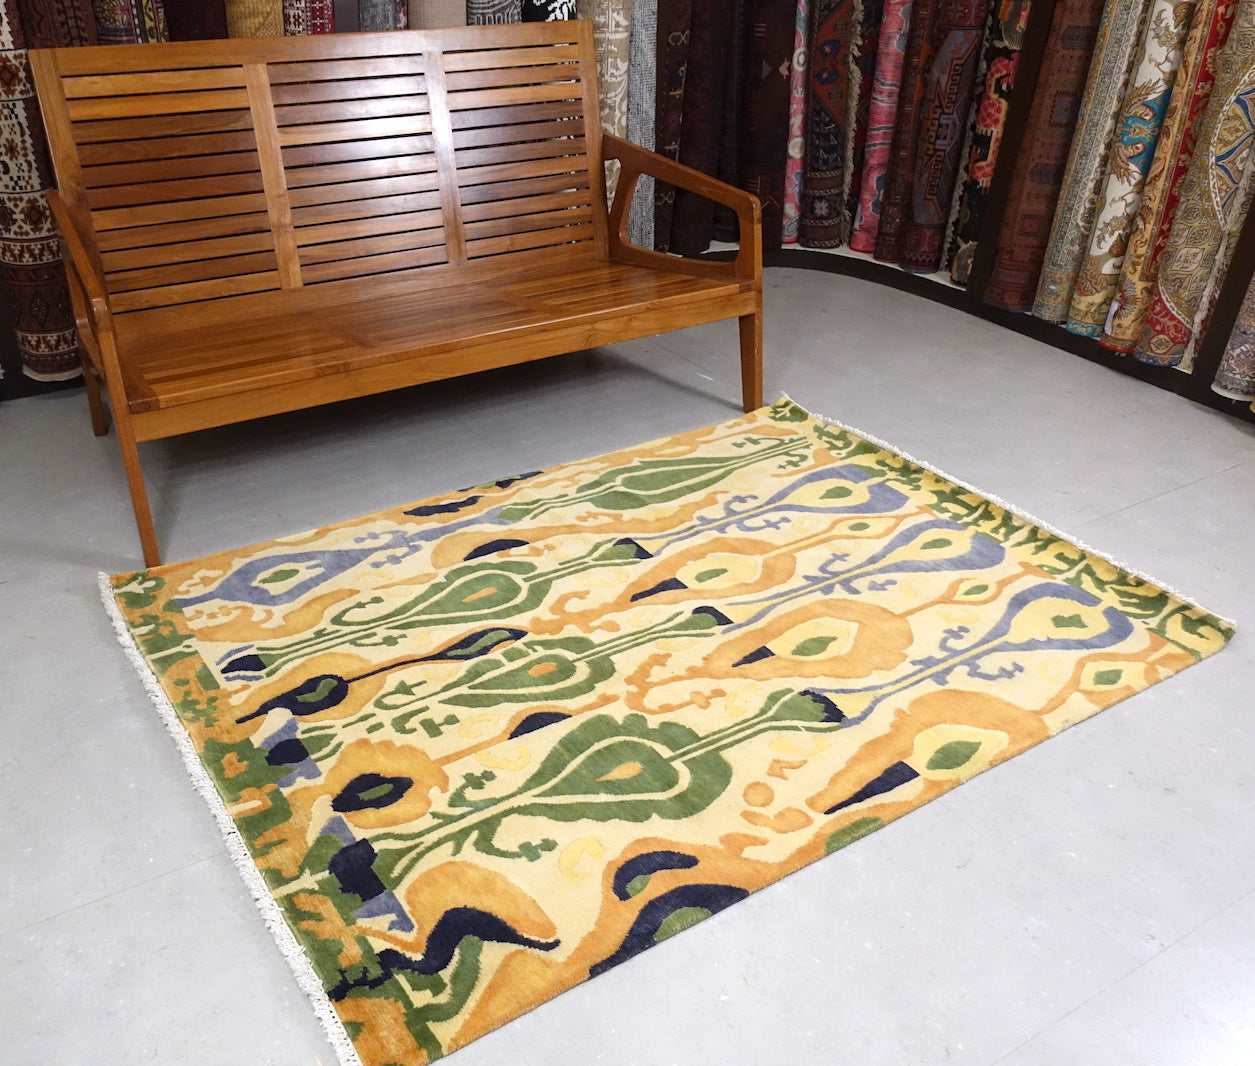 6 feet by 4 feet Yellow Ikat design rug. 